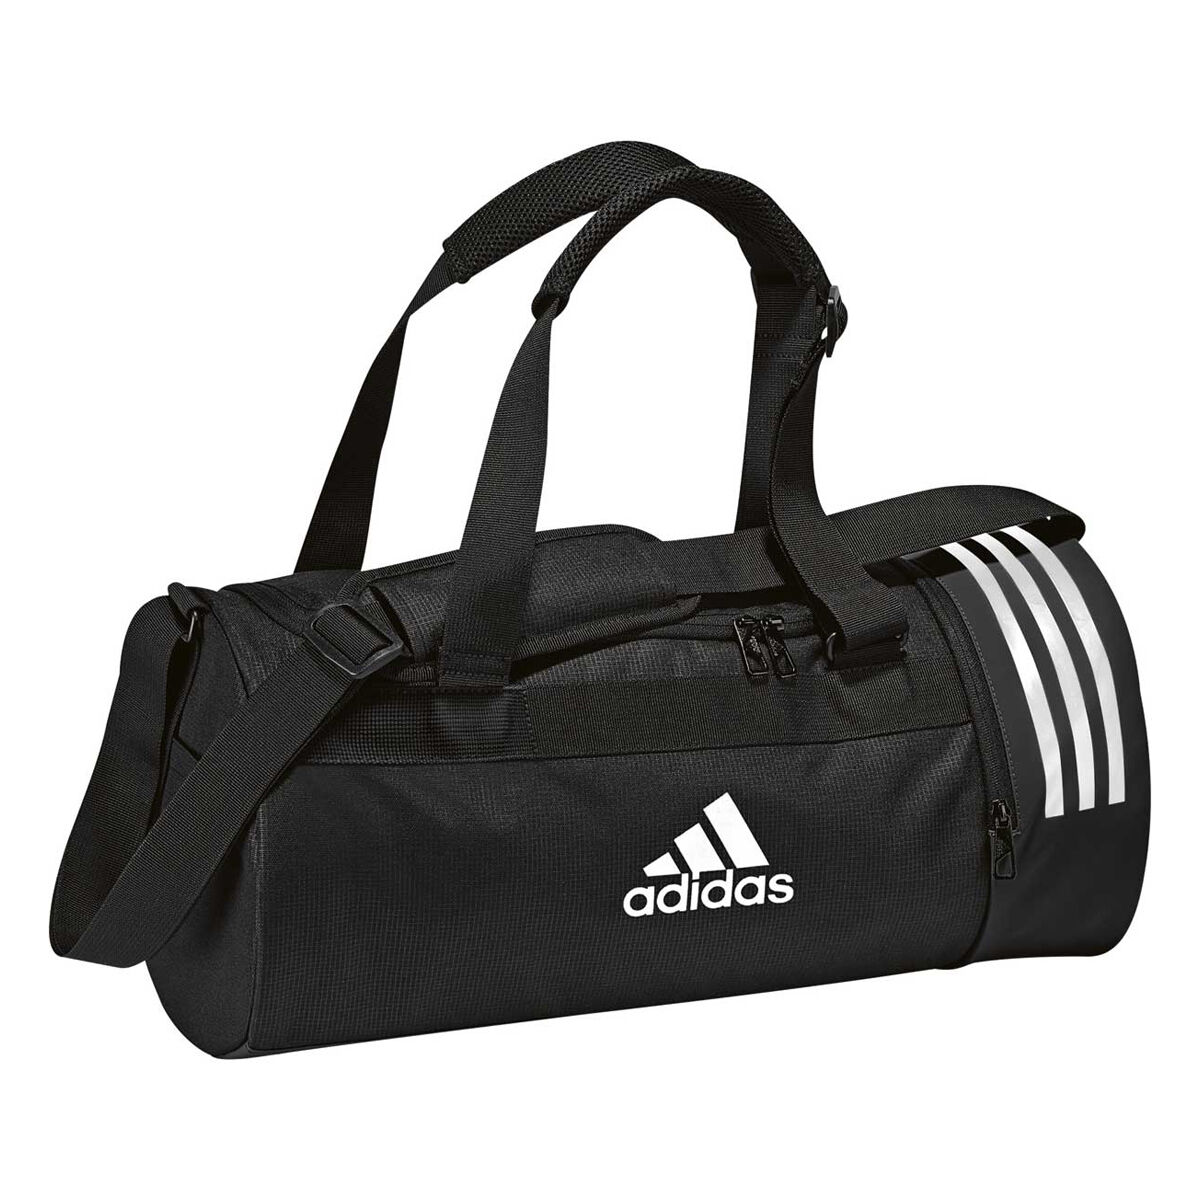 black adidas gym bag